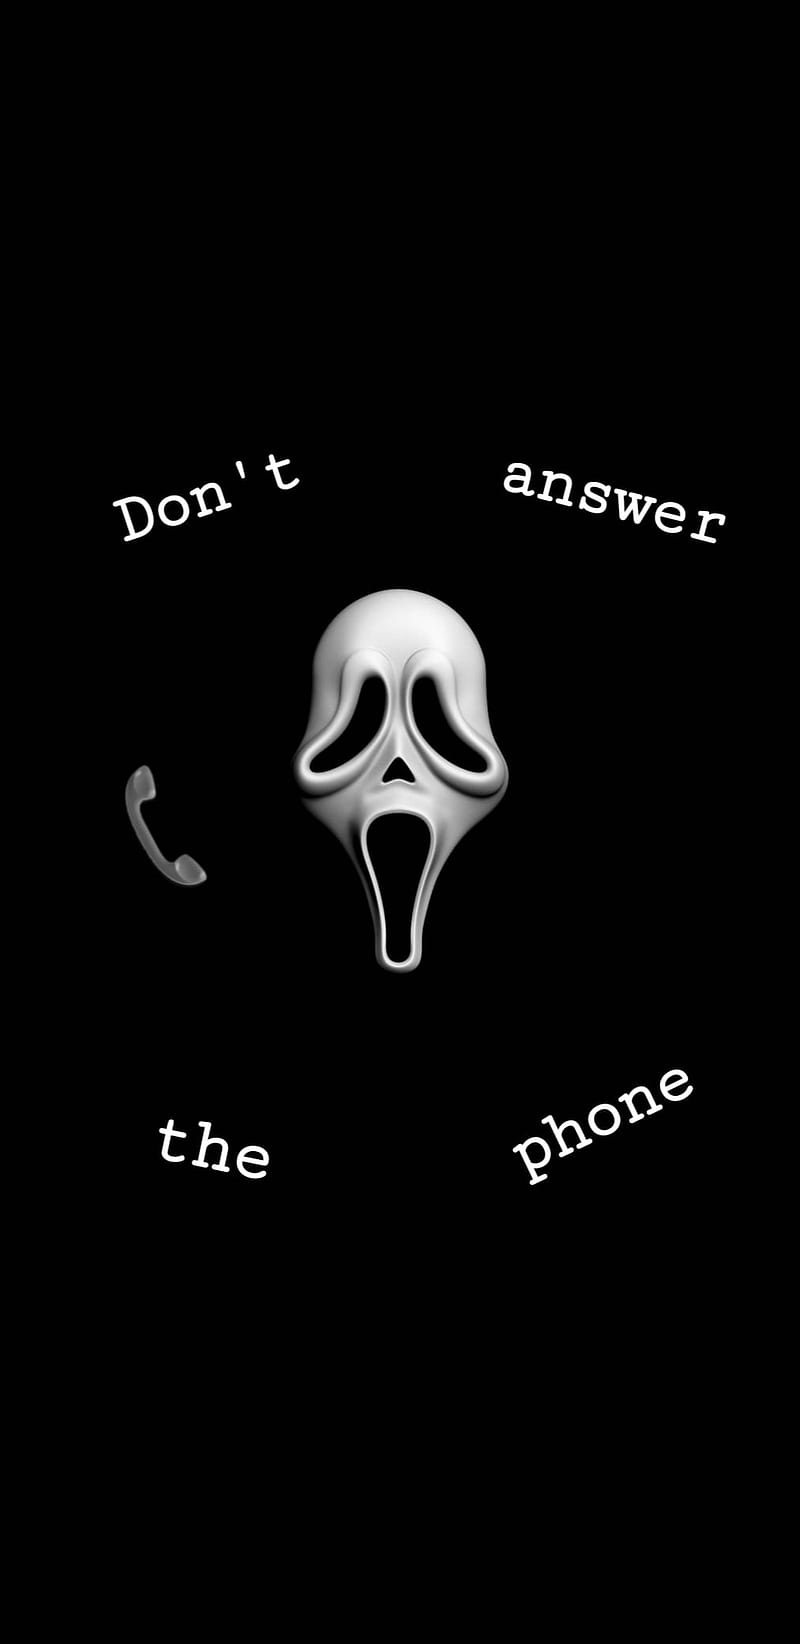 Ghostface from Scream VI 4K wallpaper download